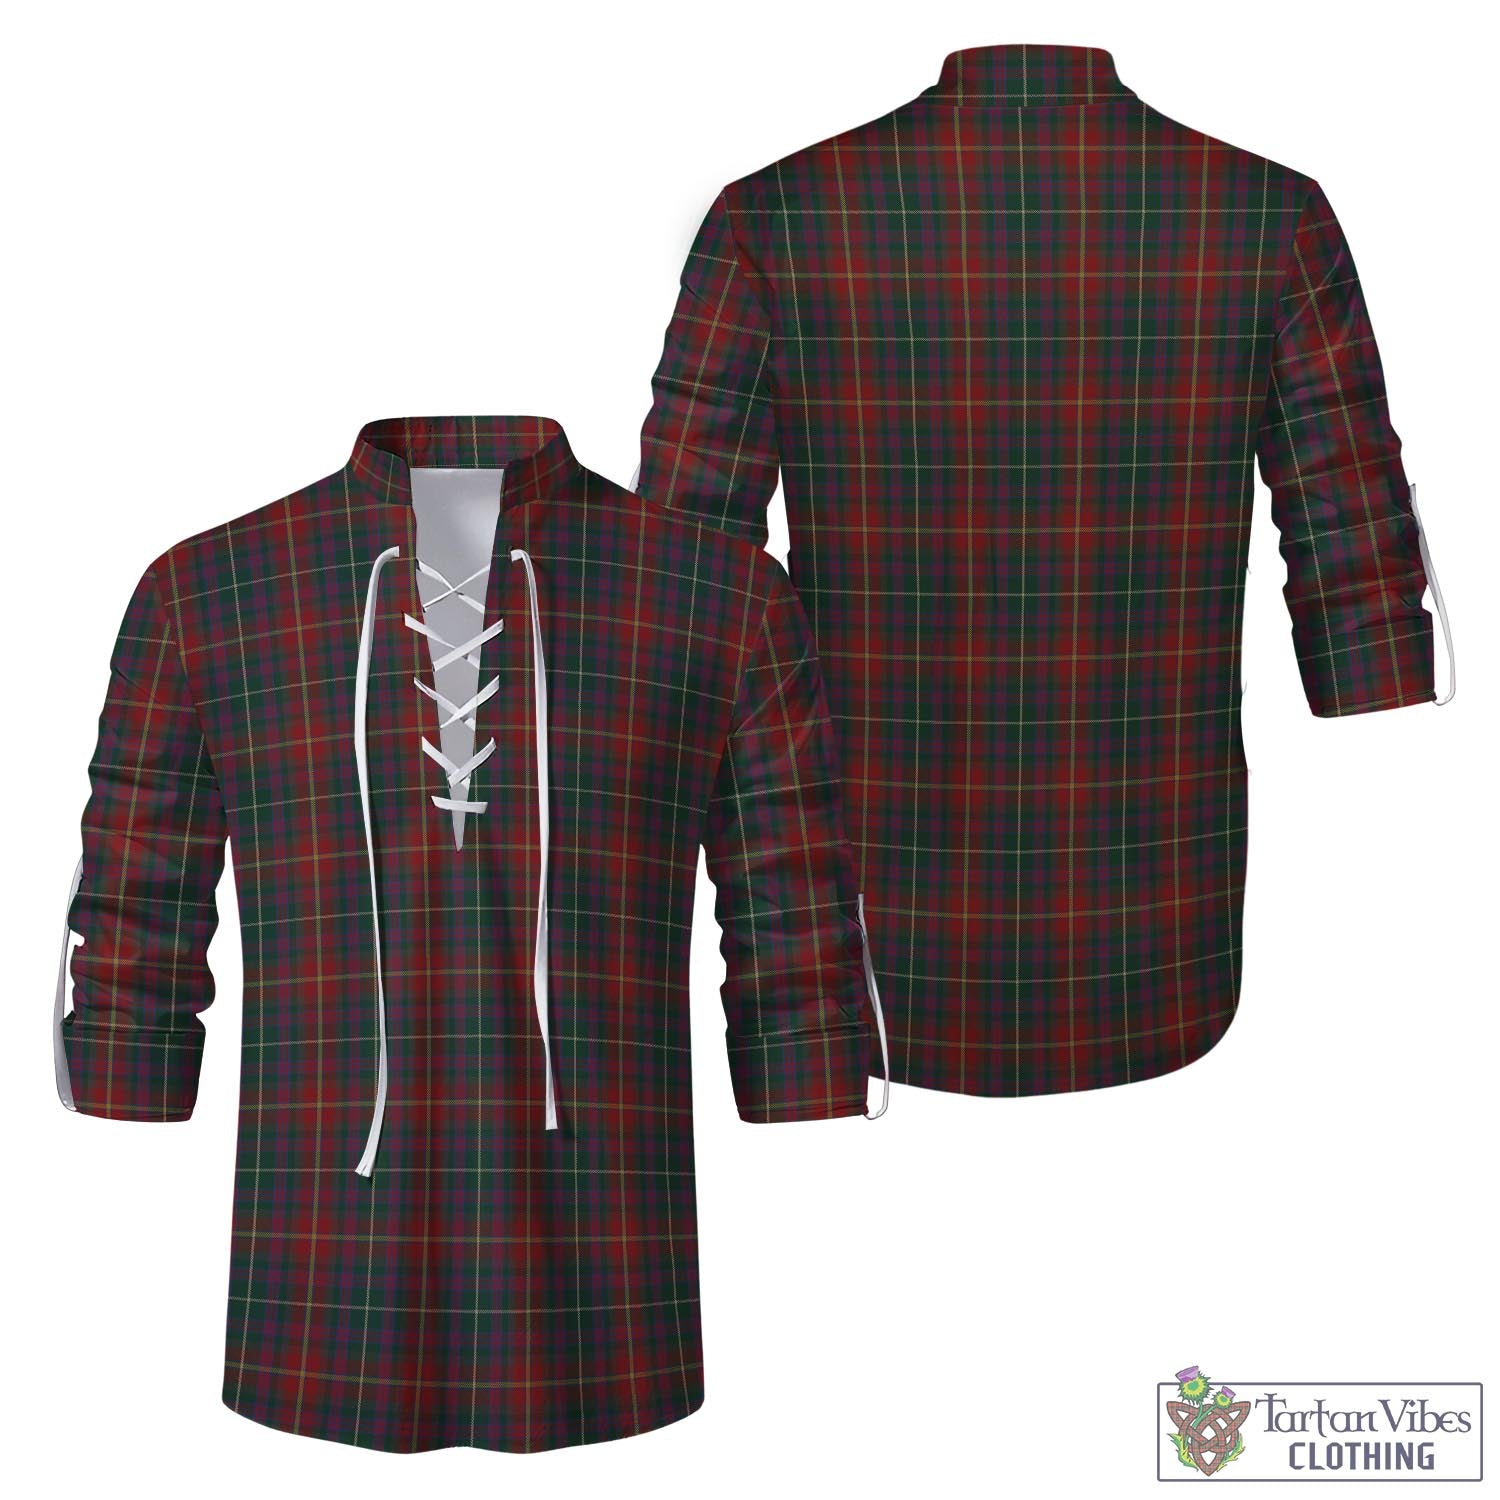 Tartan Vibes Clothing Meath County Ireland Tartan Men's Scottish Traditional Jacobite Ghillie Kilt Shirt